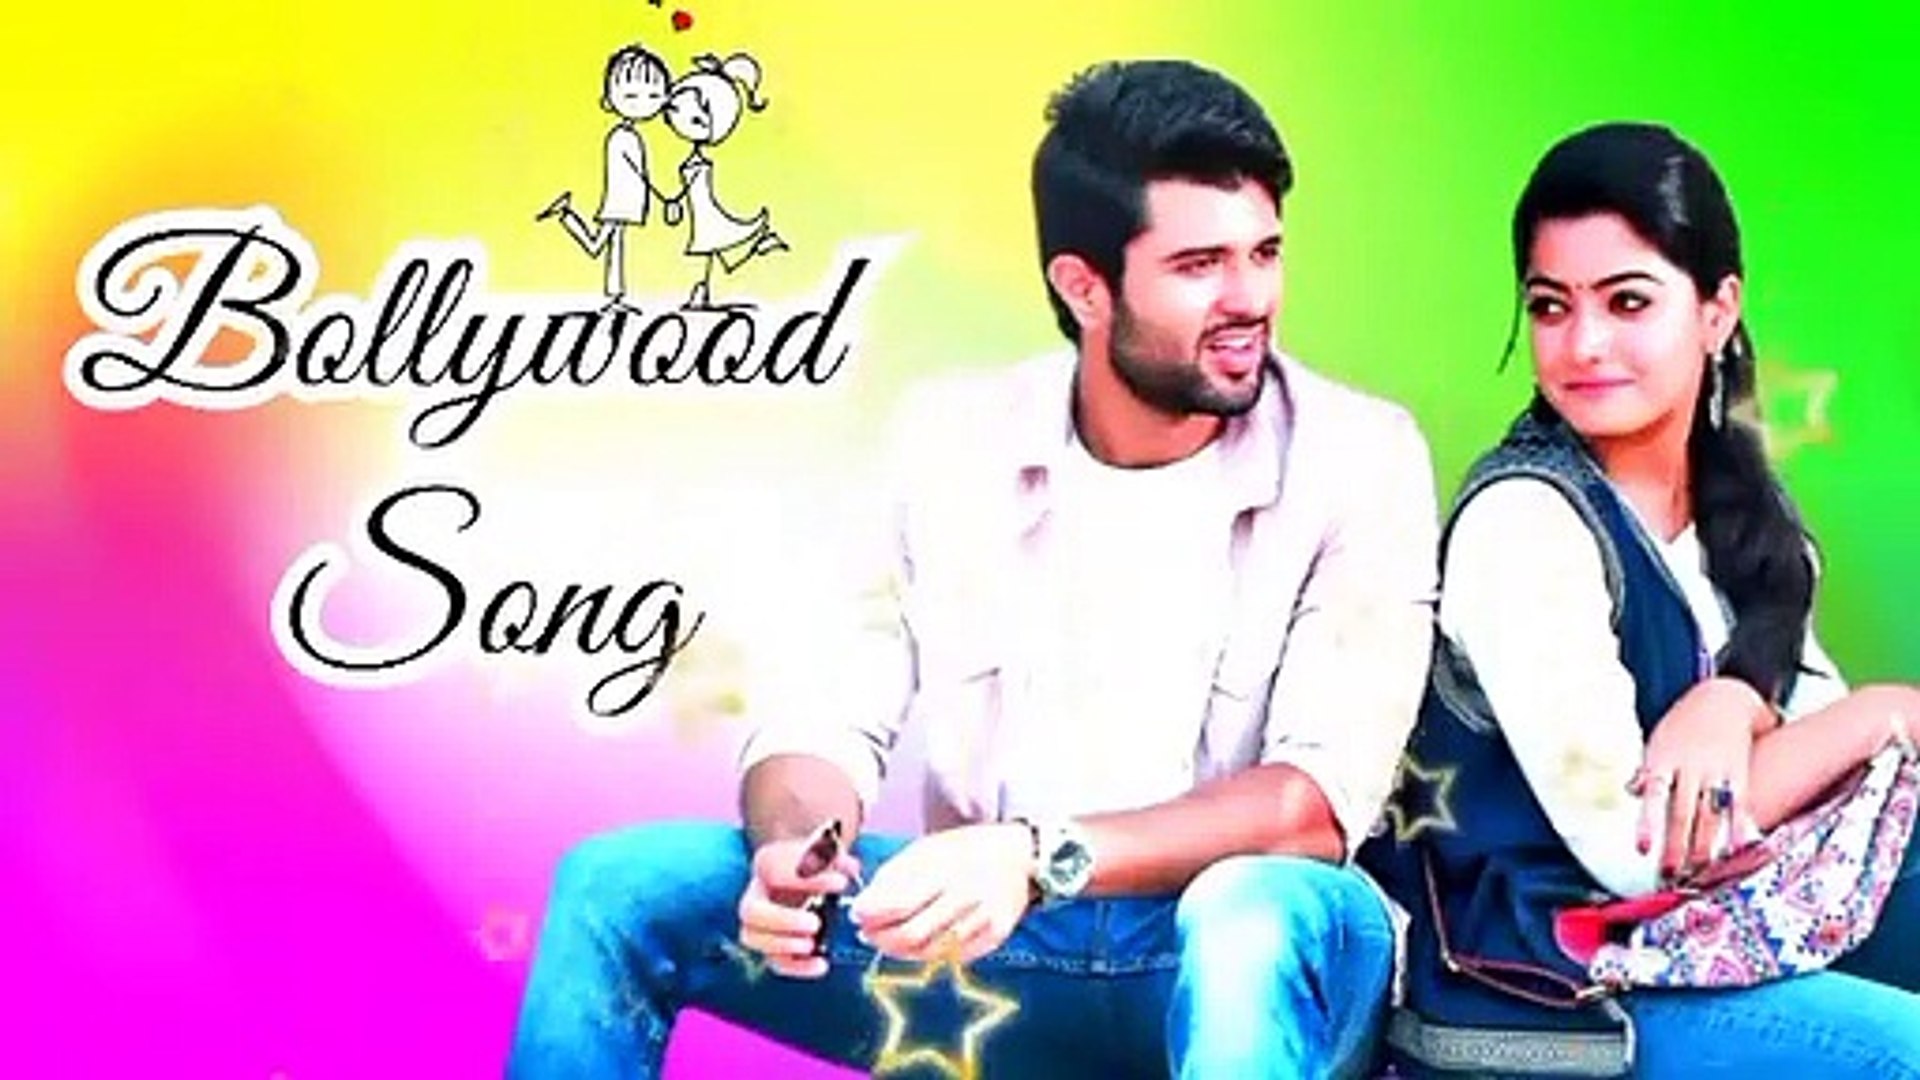 Hit Bollywood song on copyrighted songachhay kumar